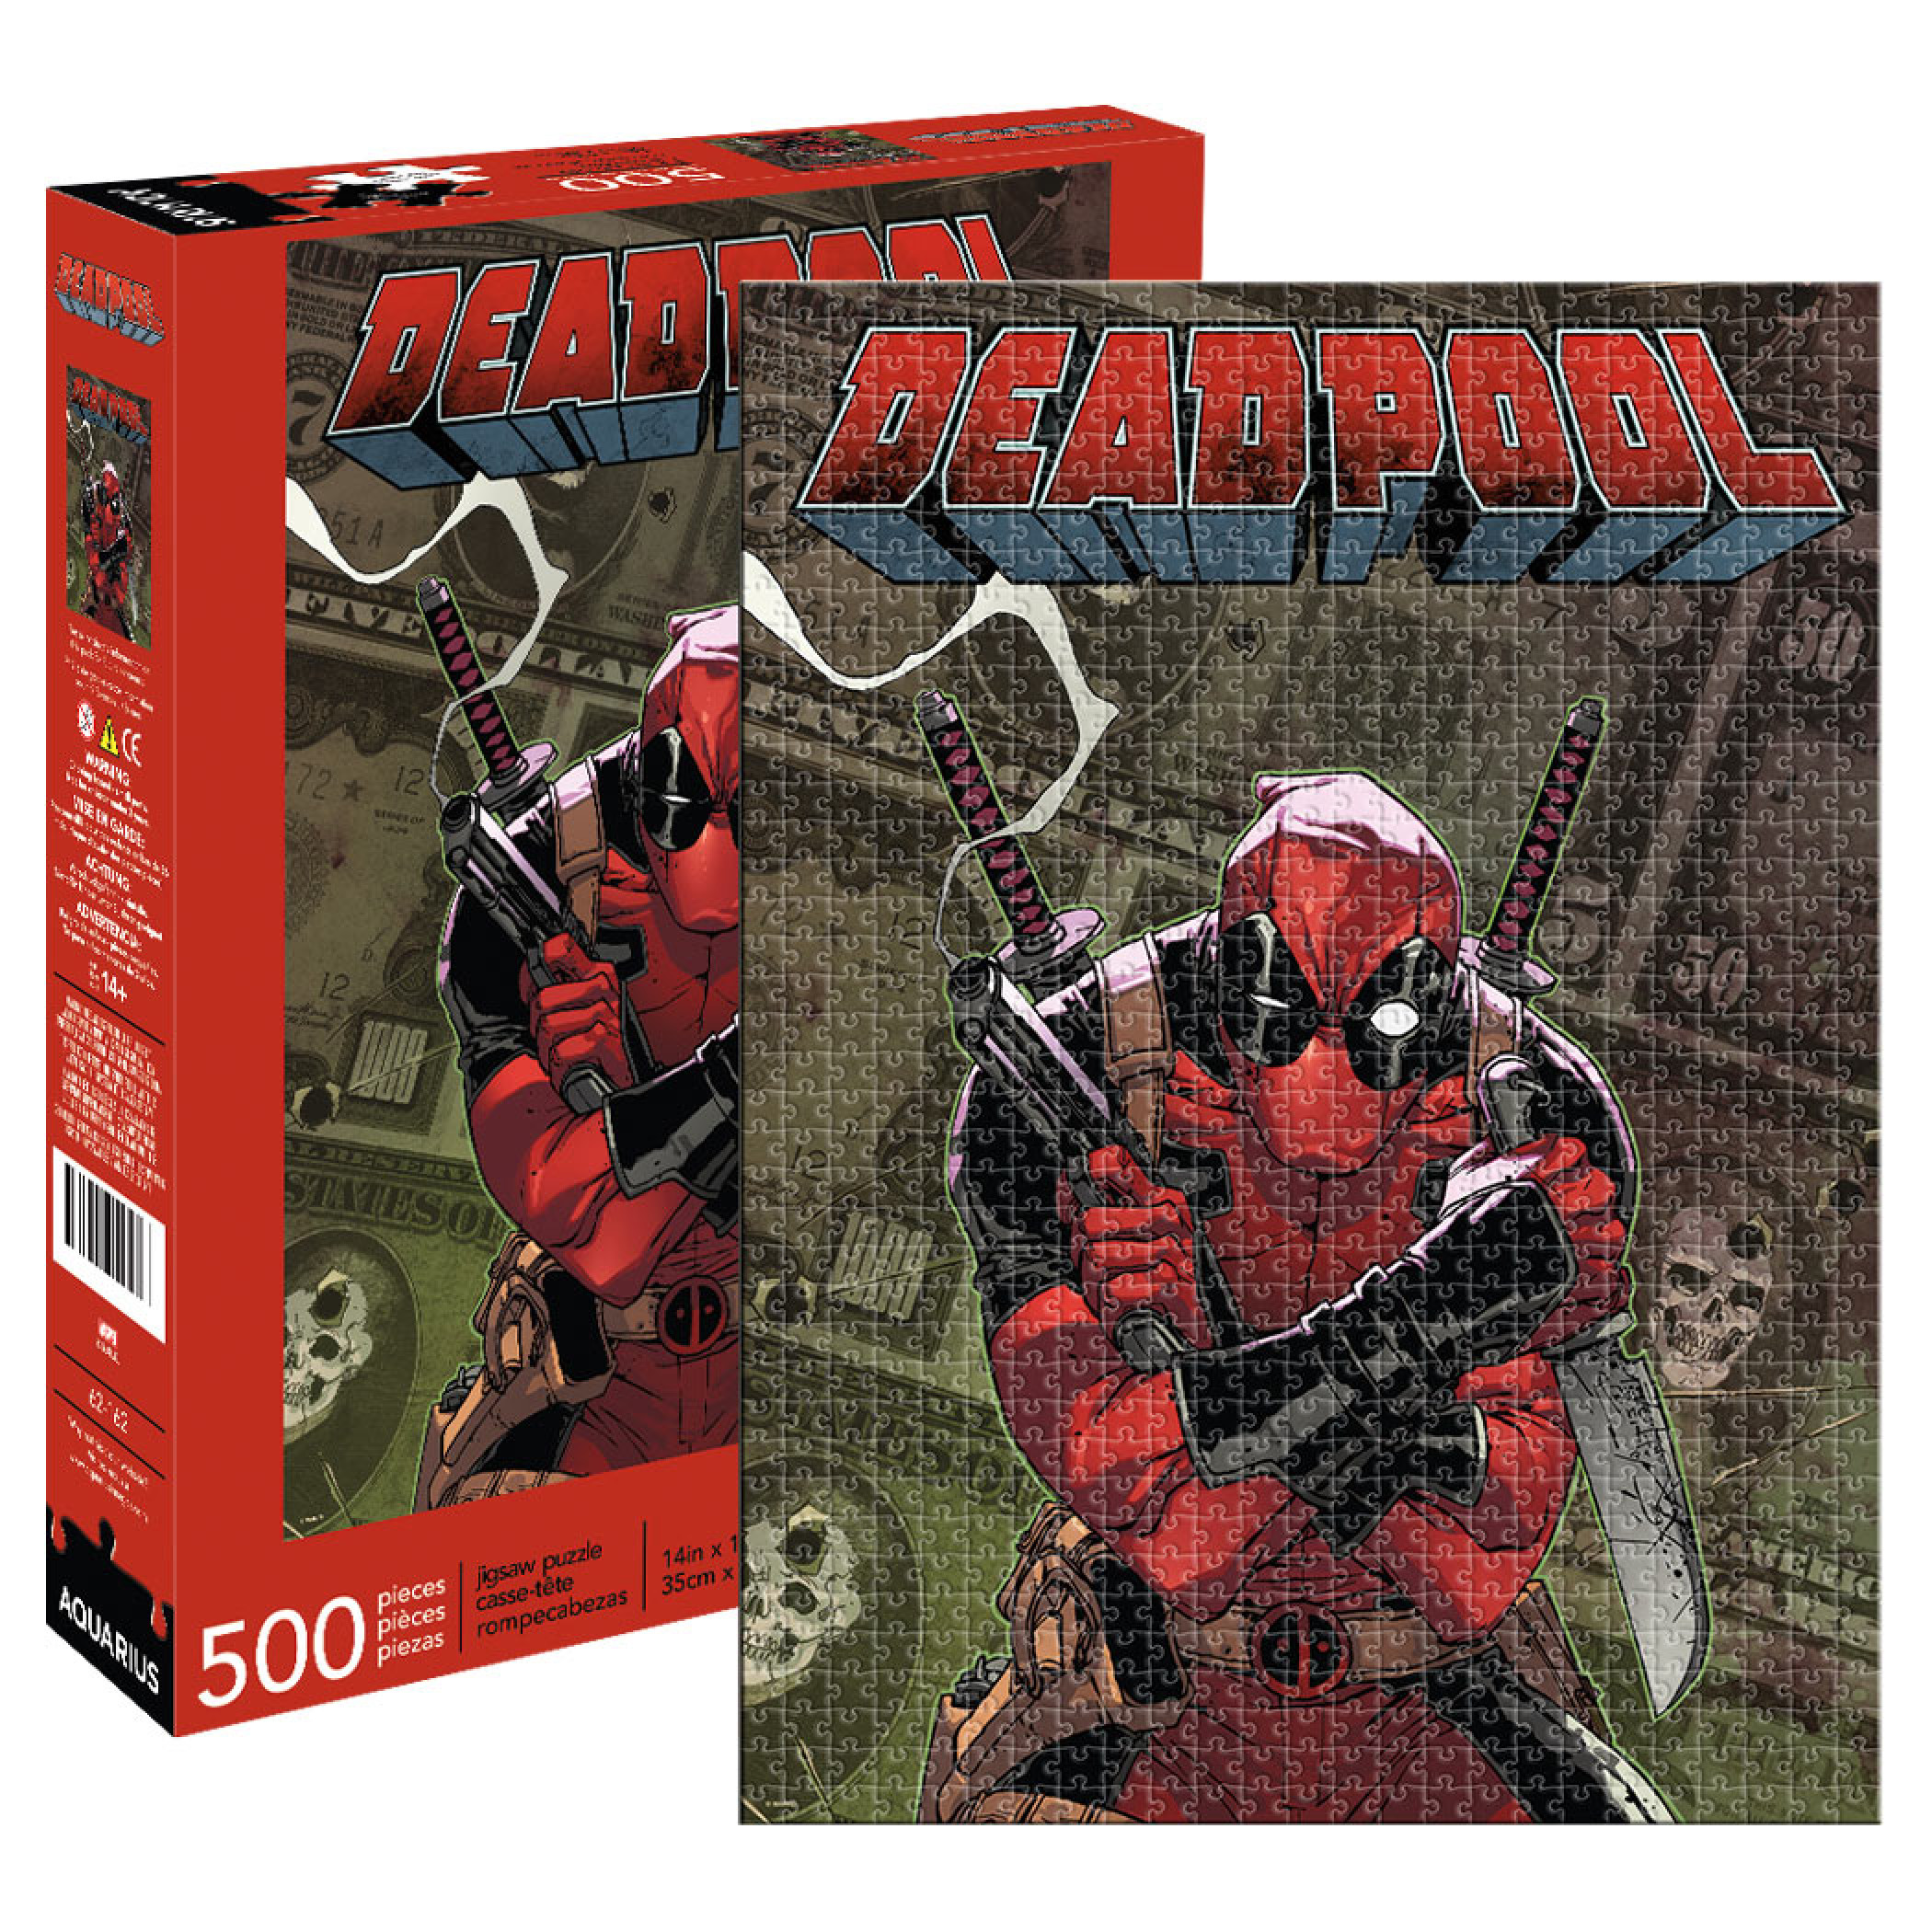 Deadpool Comic Cover 500 Piece Puzzle